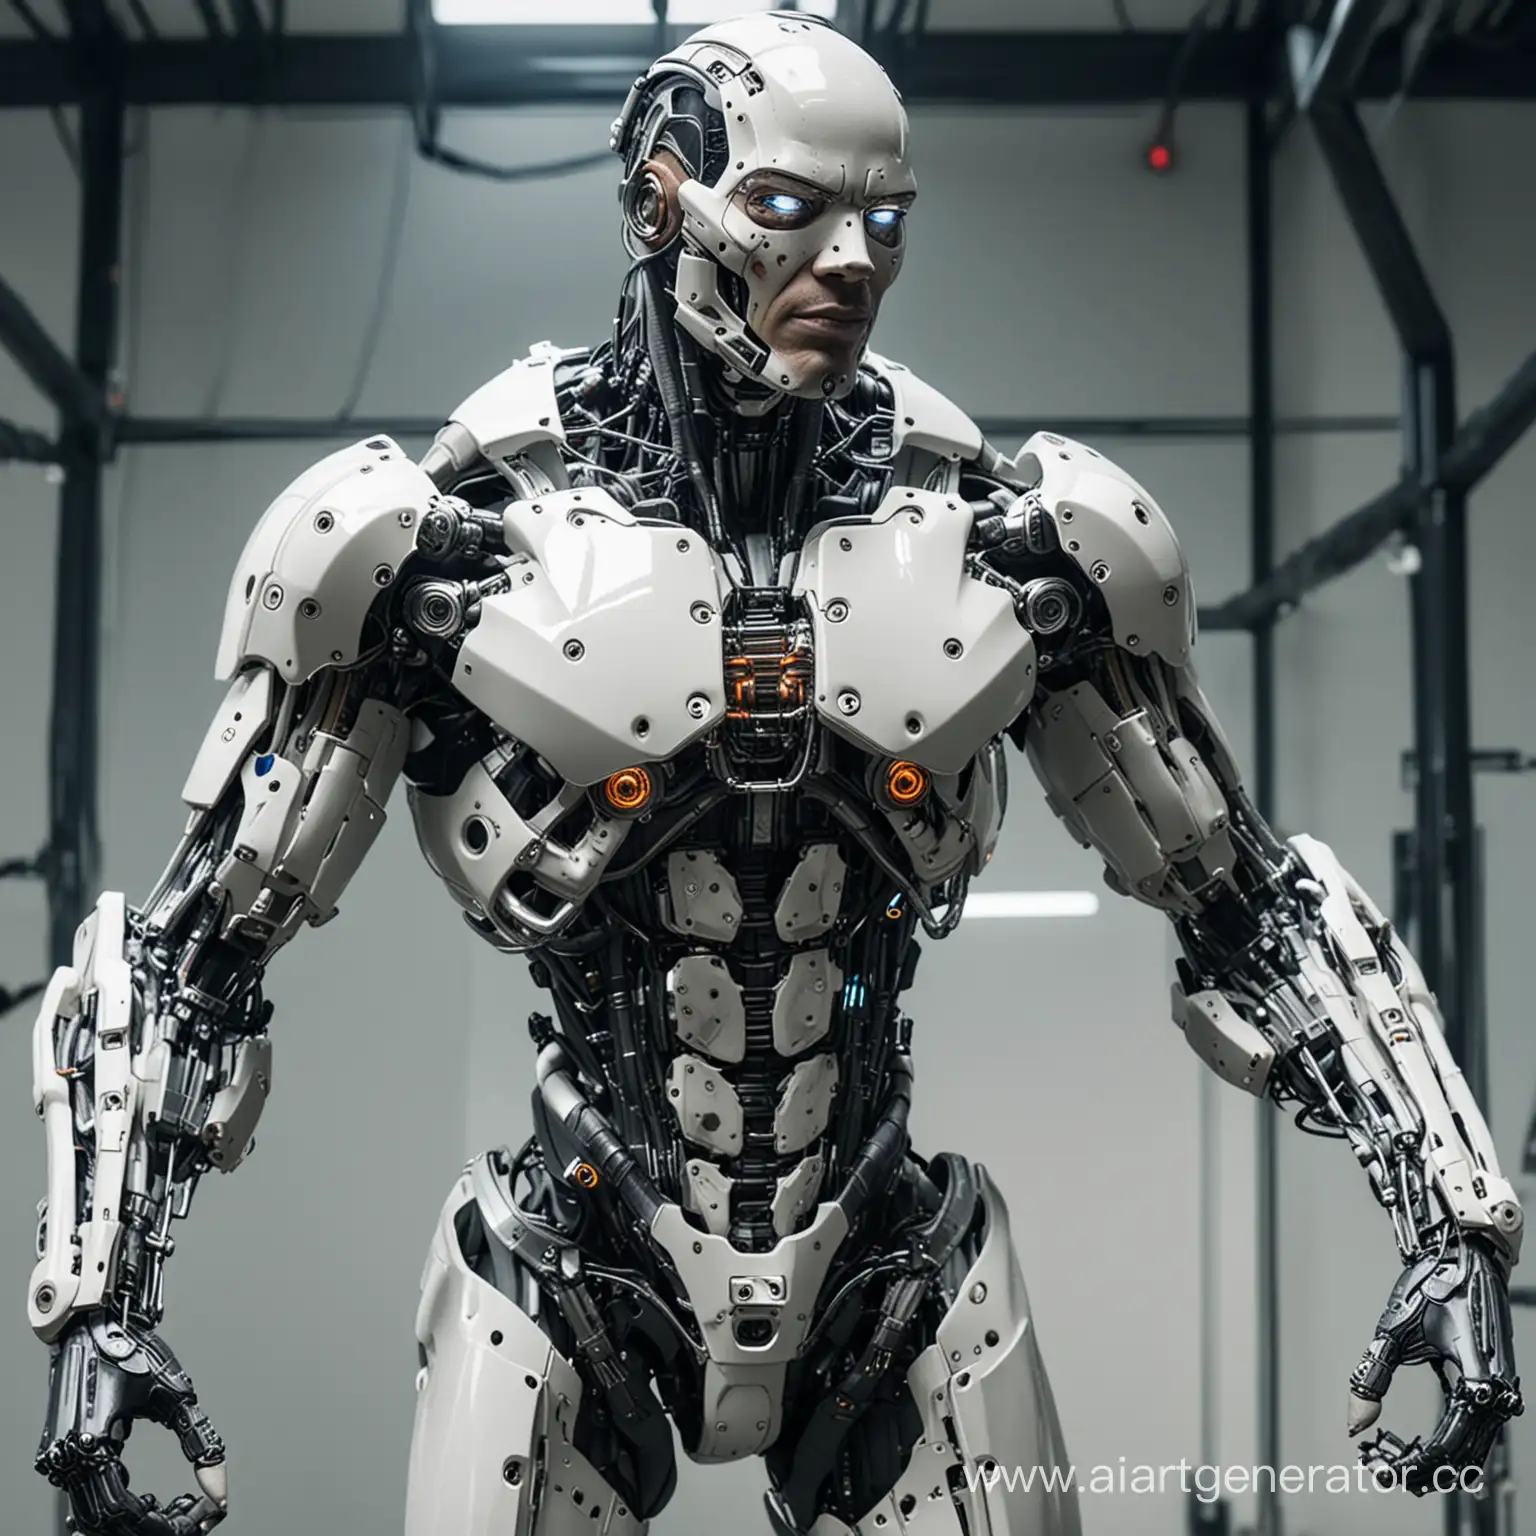 Cyborg-in-Exoskeleton-Demonstrates-Restraint-of-Incredible-Strength